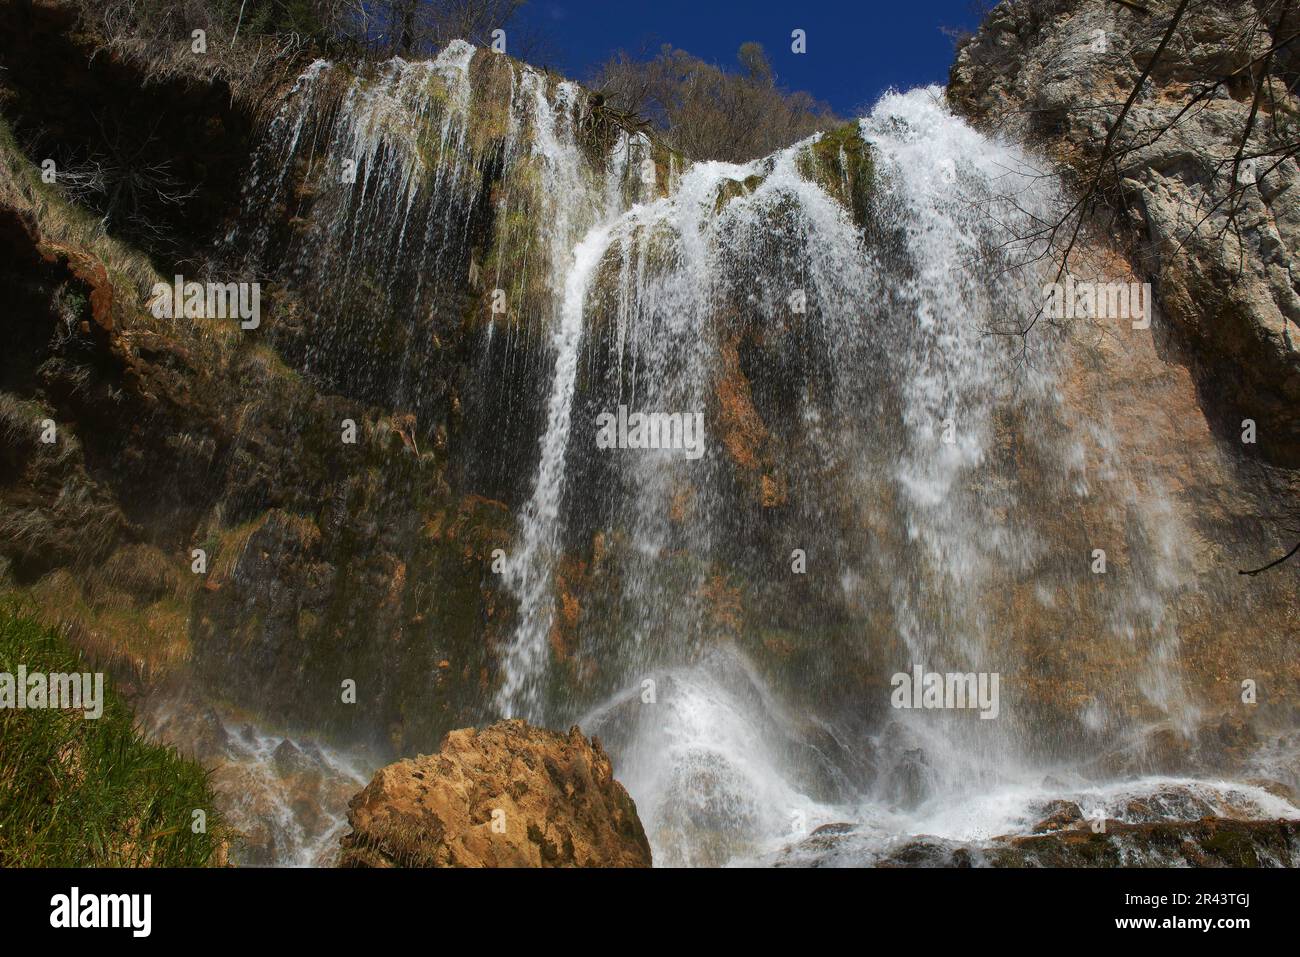 Tragacete, Jucar River, El Molino Waterfall, Serrania de Cuenca Natural Park, Cuenca Province, Castilla-La Mancha, Spain Stock Photo